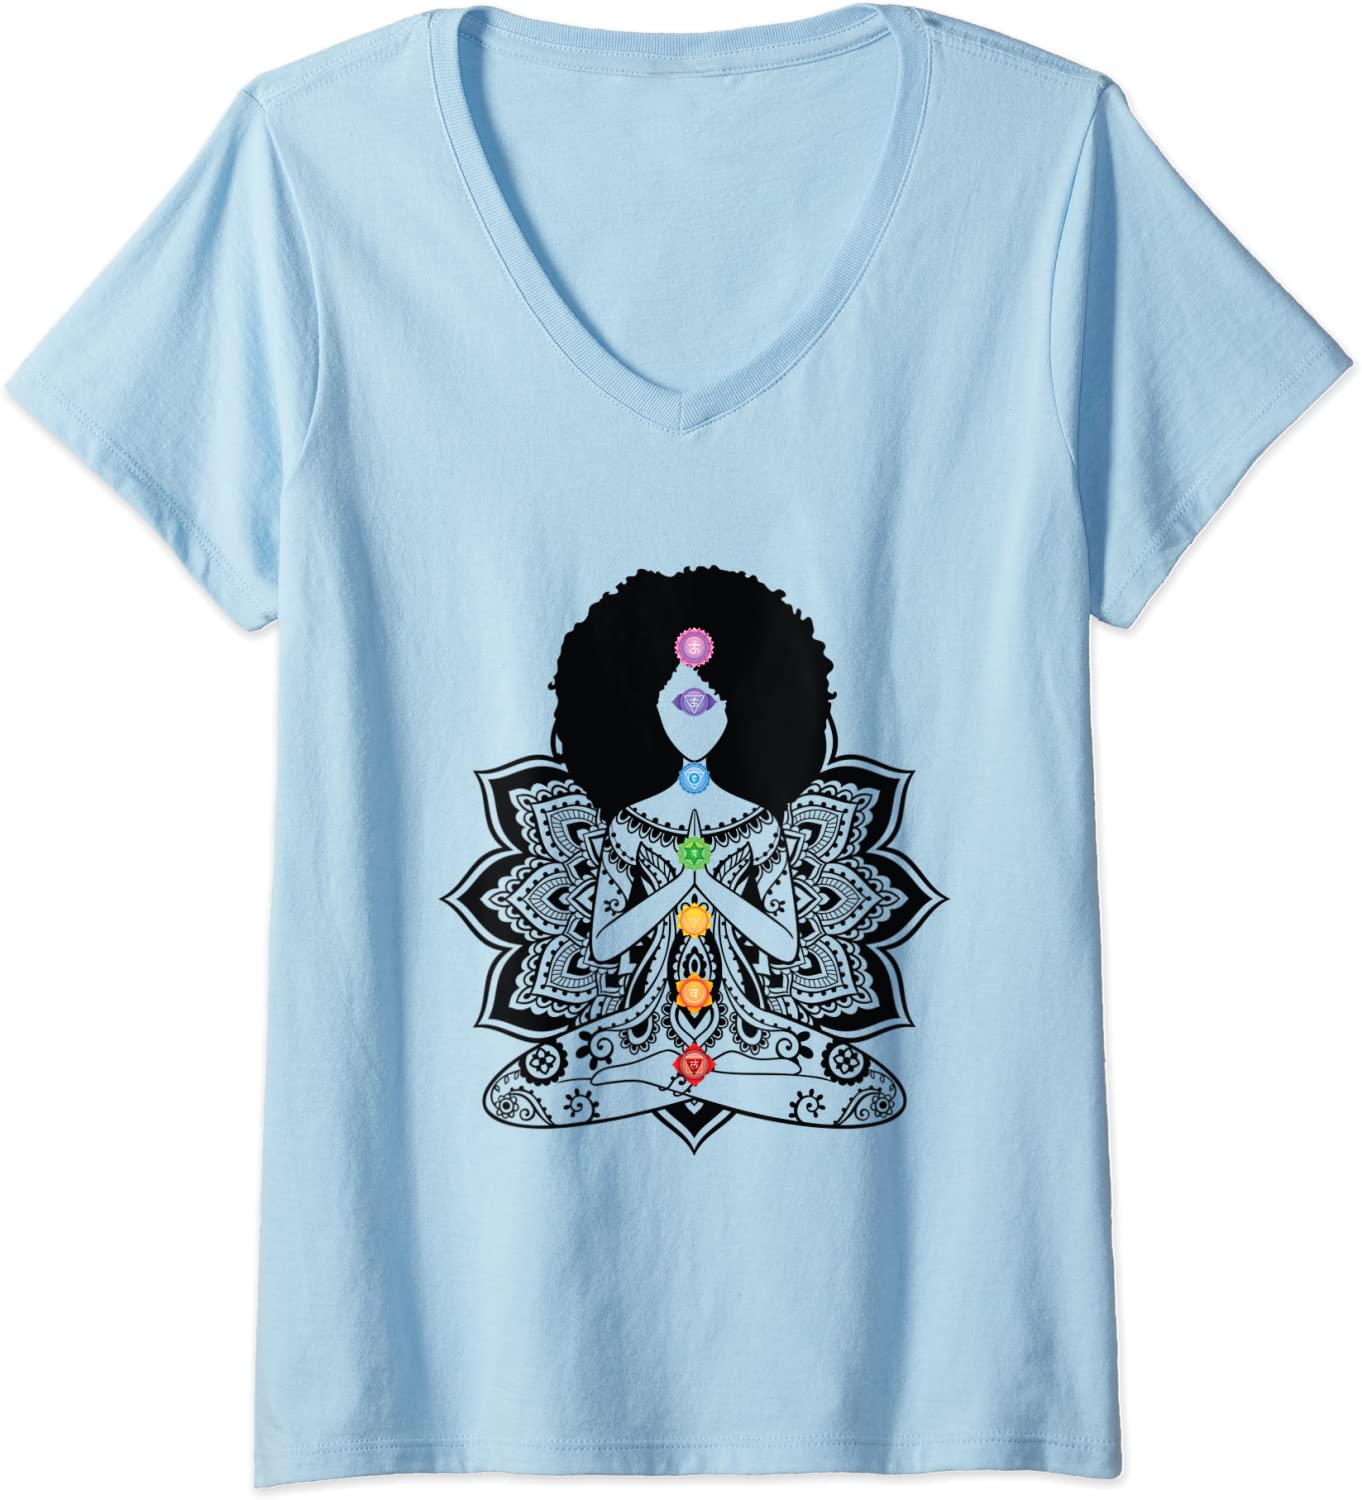 https://yogirepublic.com/wp-content/uploads/2022/02/Womens-Afro-Black-Girl-Yoga-Zen-Mandala-Seven-Chakra-Meditation-V-Neck-T-Shirt-productor-mockup.jpg